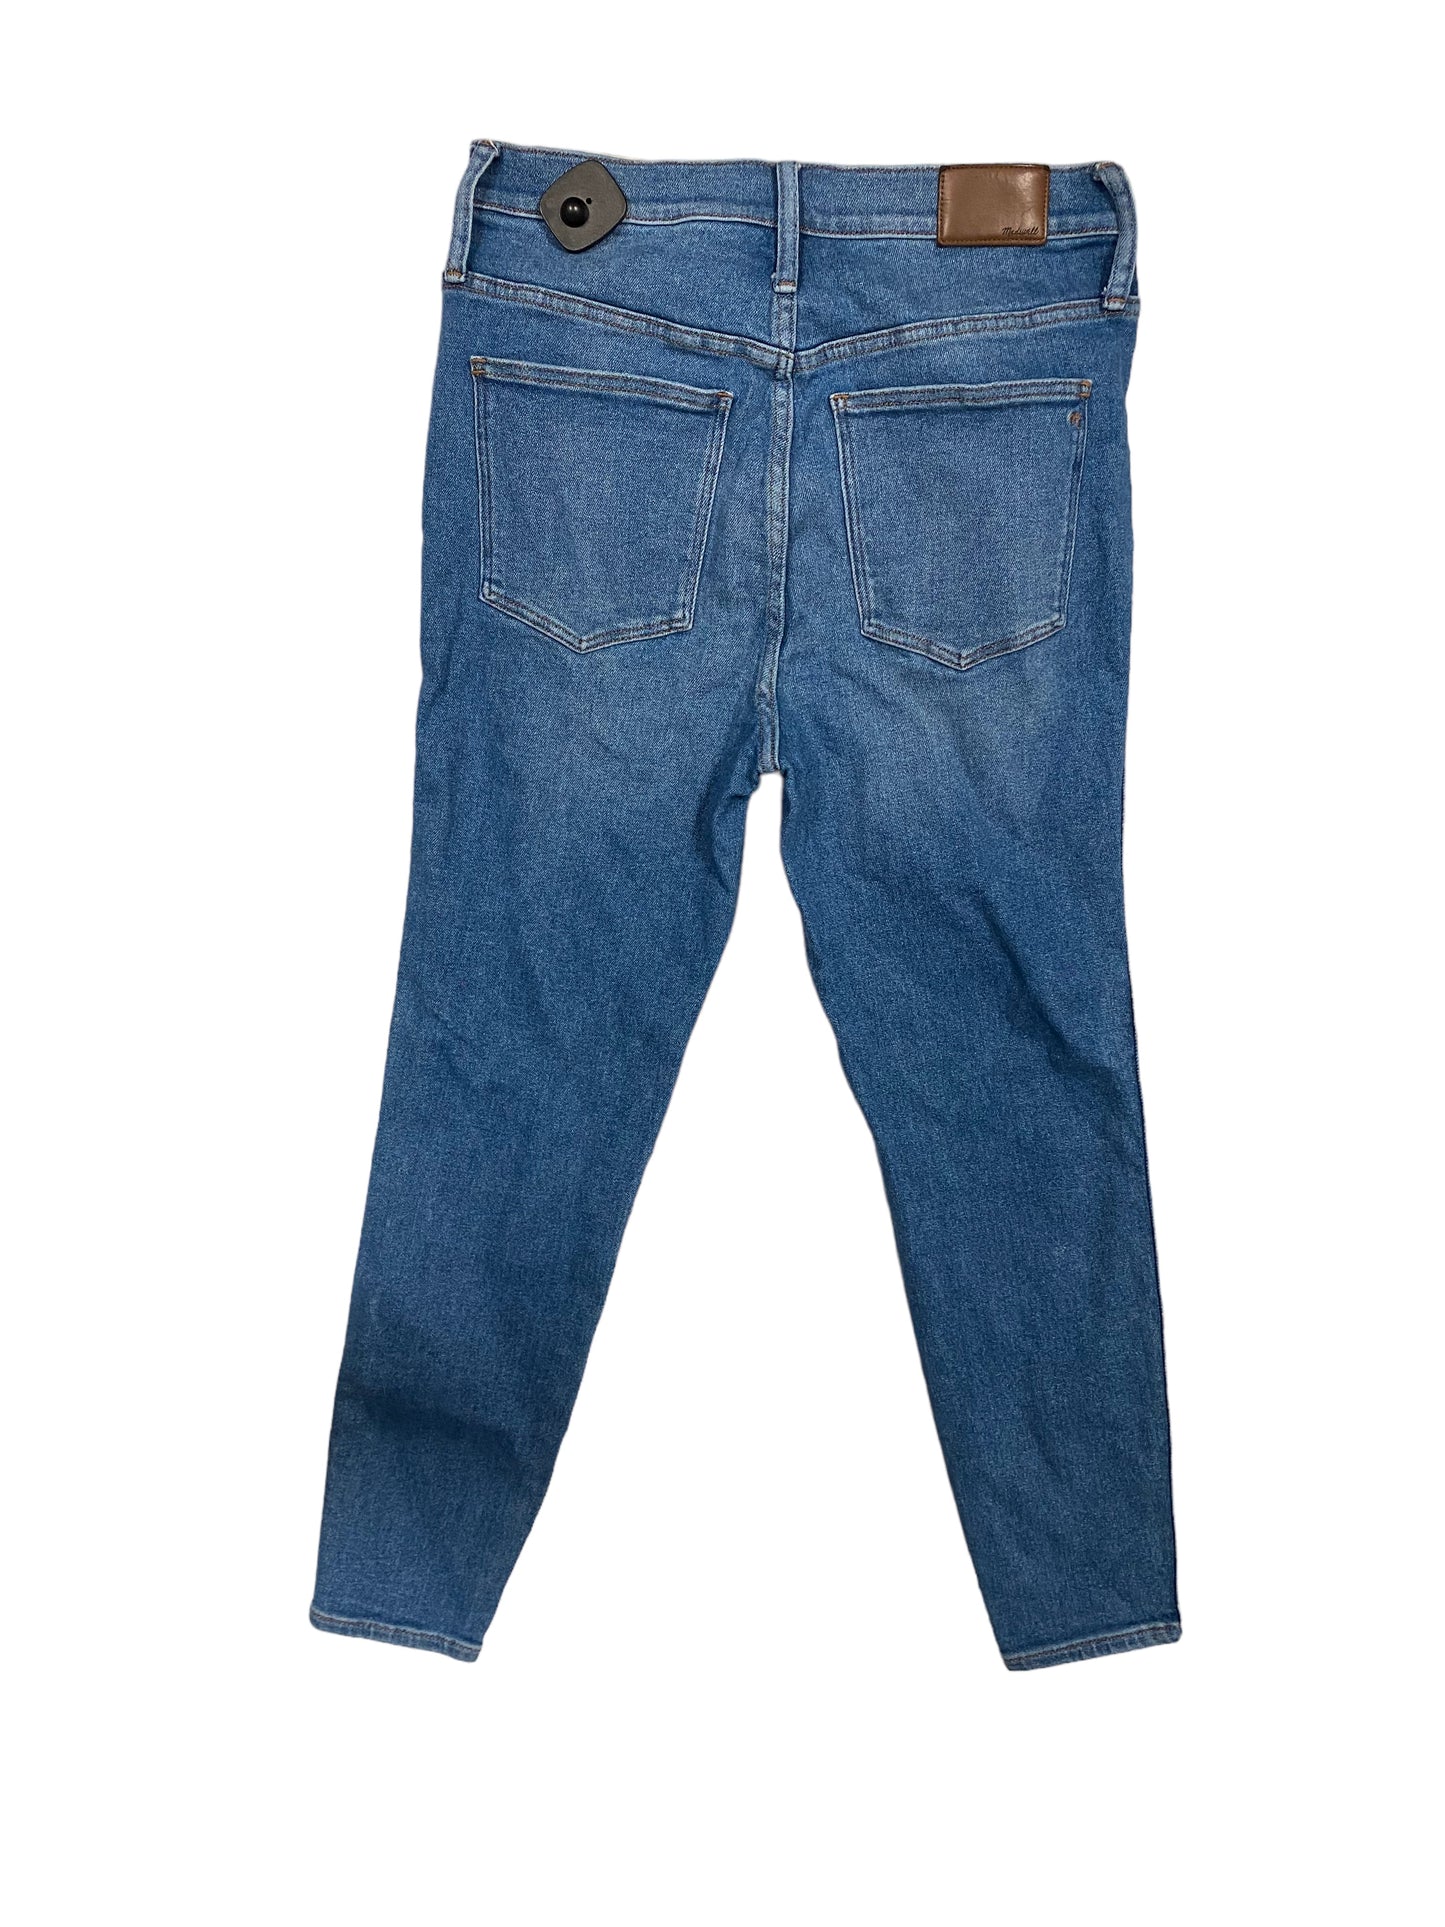 Blue Denim Jeans Skinny Madewell, Size 12